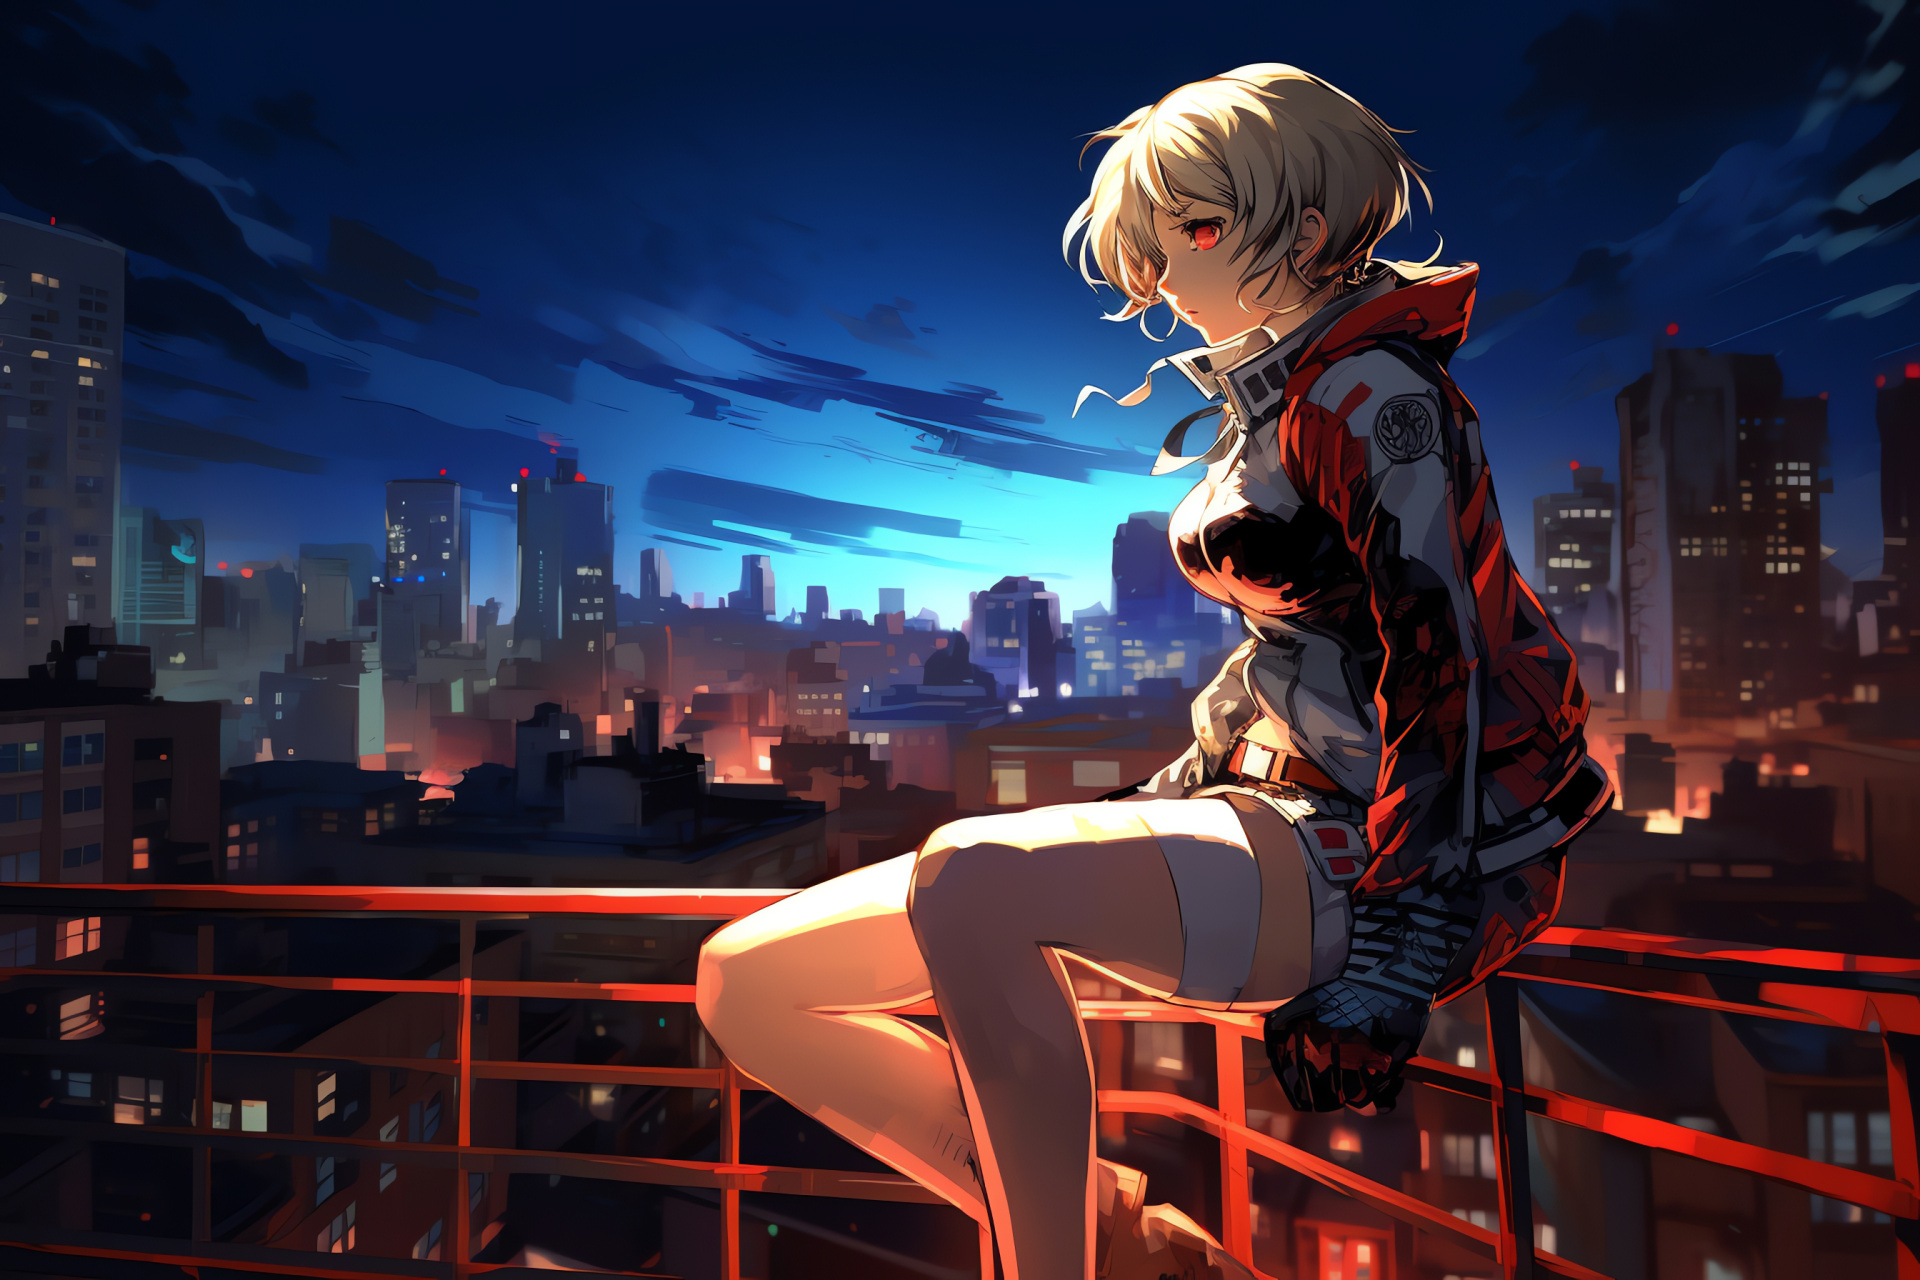 Persona 3 SEES team, Aigis on rooftop, Nighttime cityscape, Urban neon illumination, Gaming backdrop, HD Desktop Image